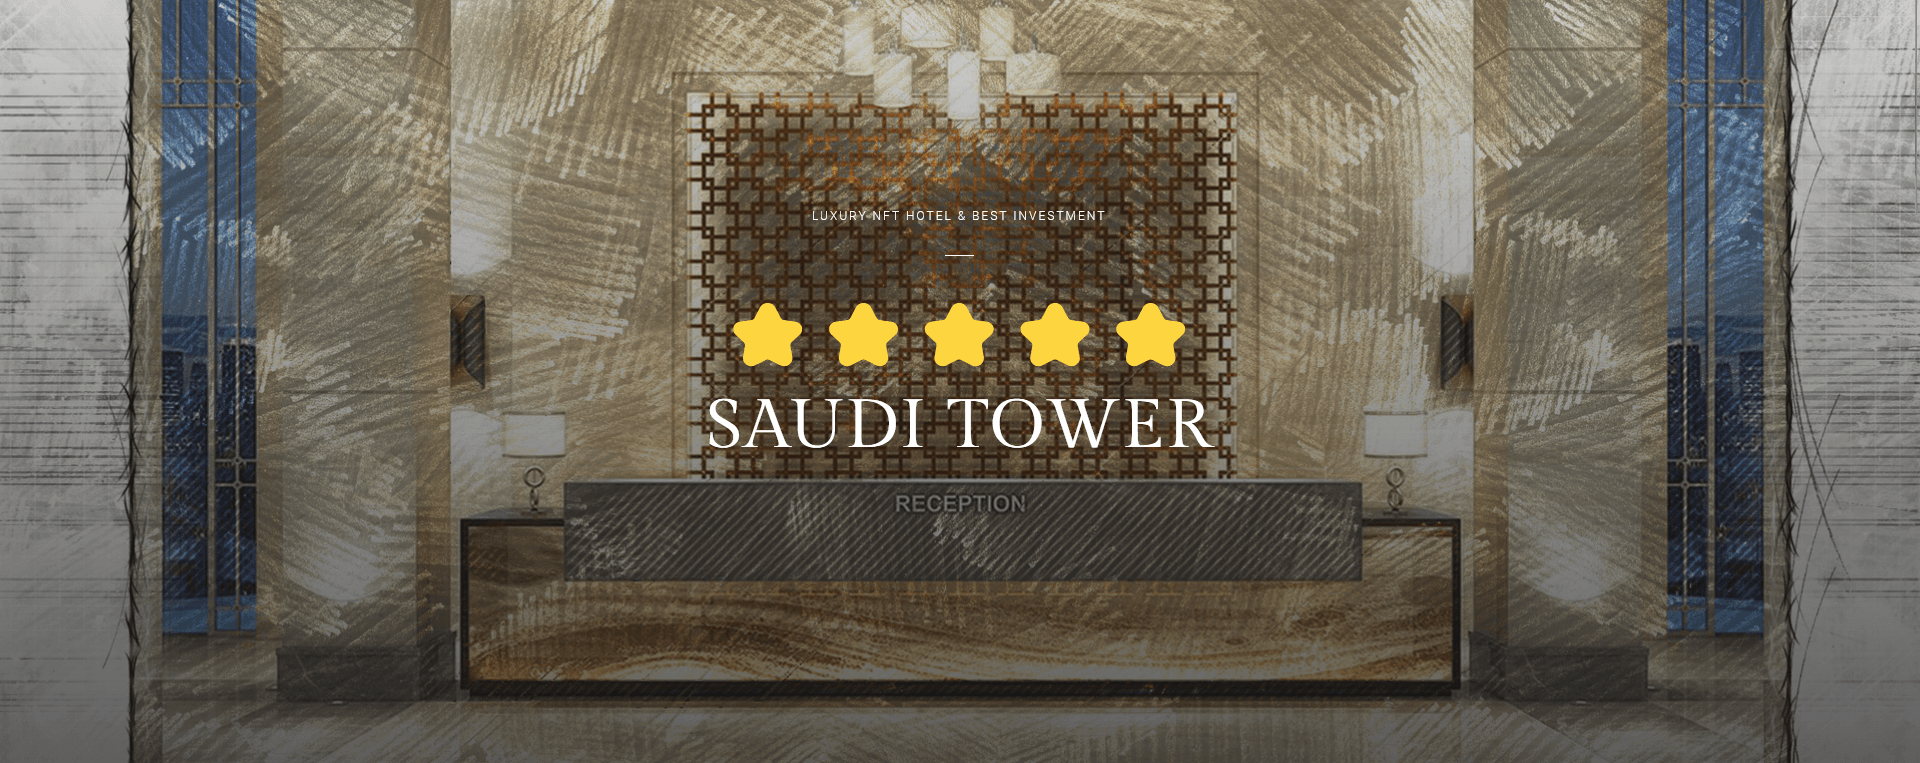 Saudi Tower